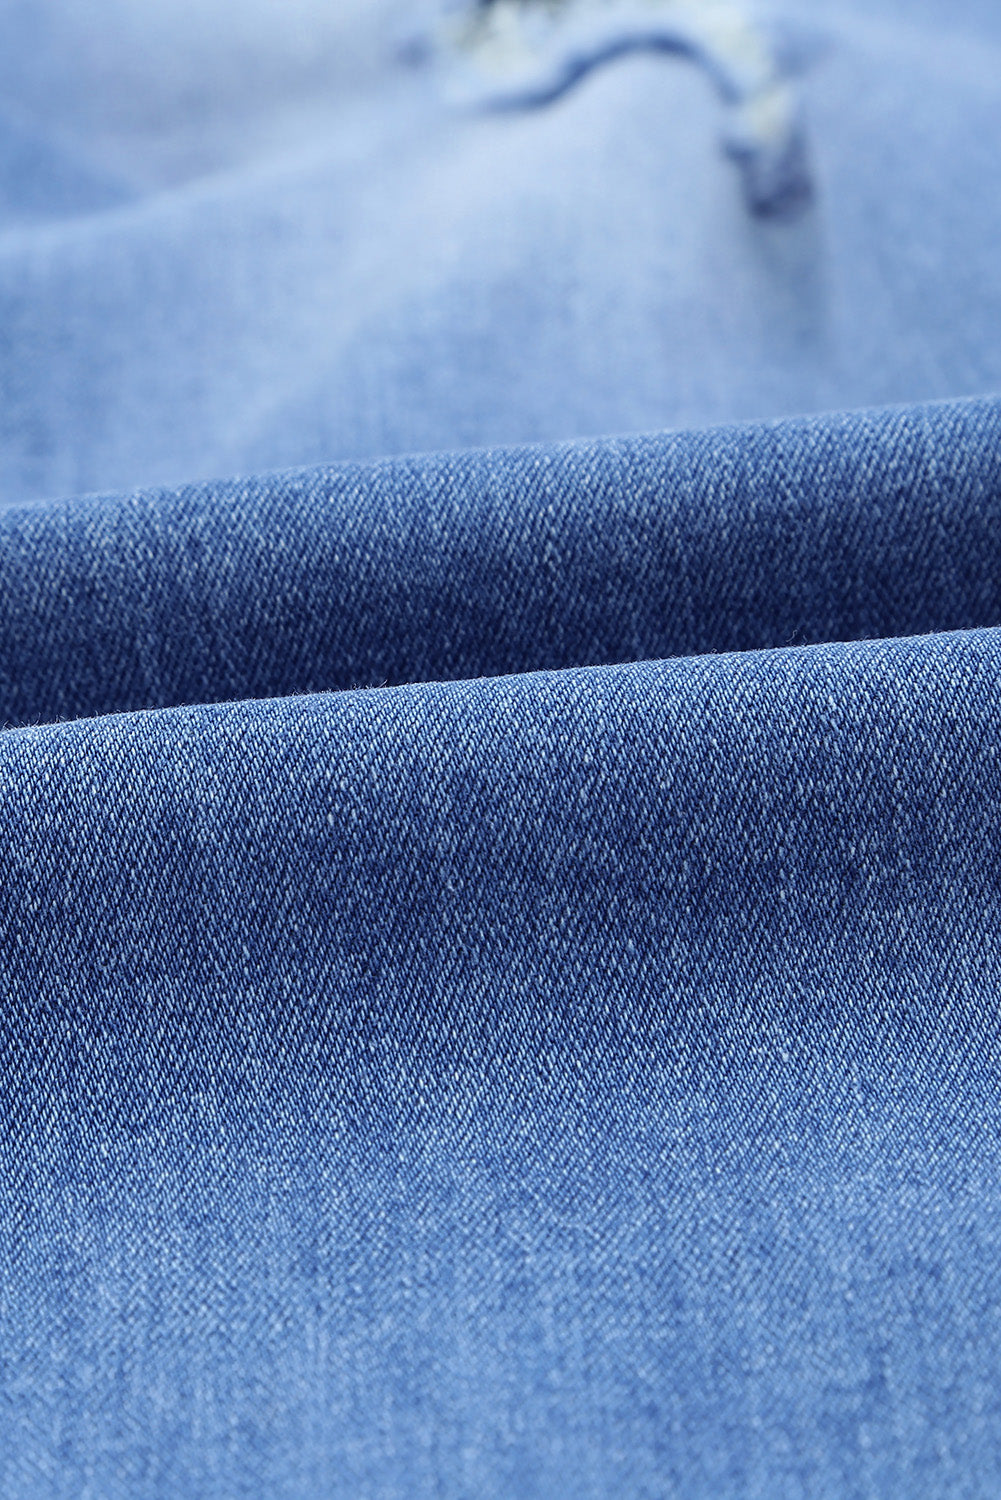 Sky Blue Drawstring Elastic Waist Hole Ripped Jeans Jeans JT's Designer Fashion